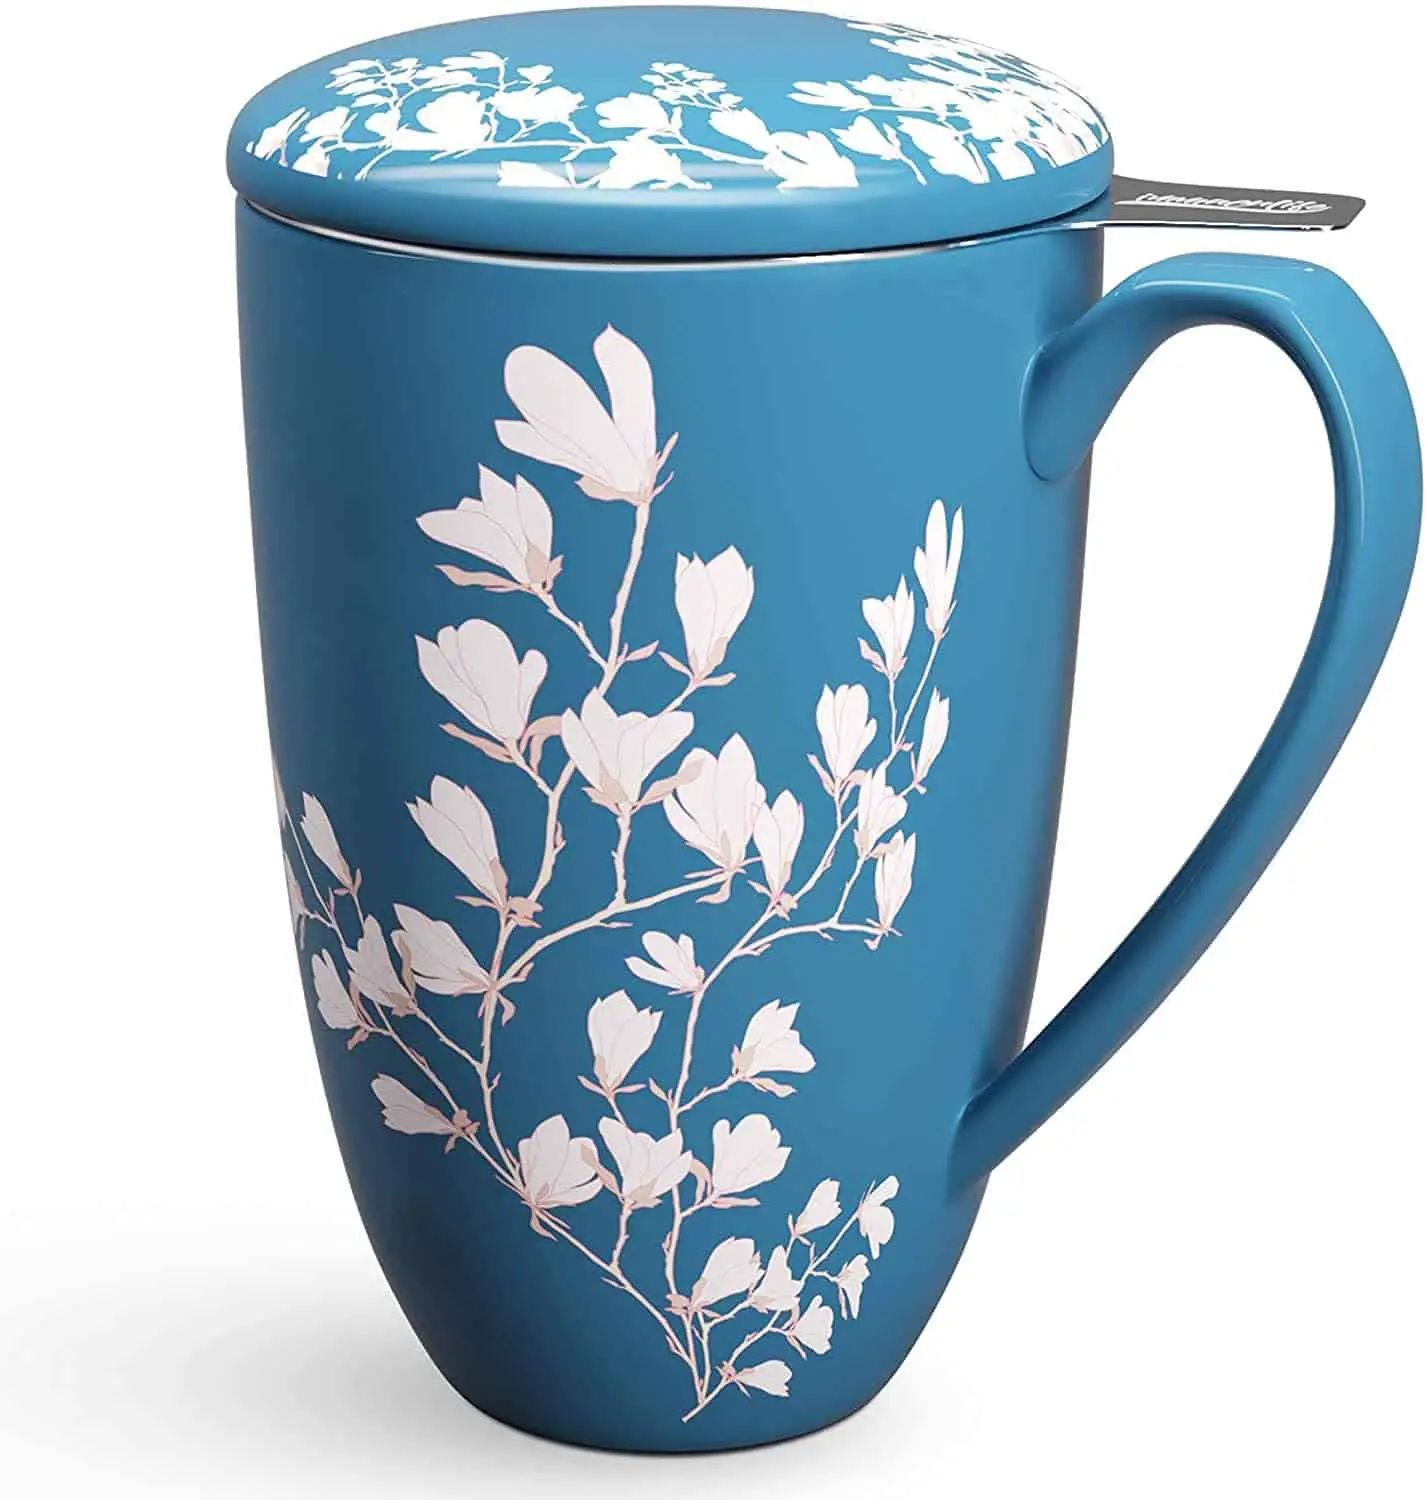 best tea mug